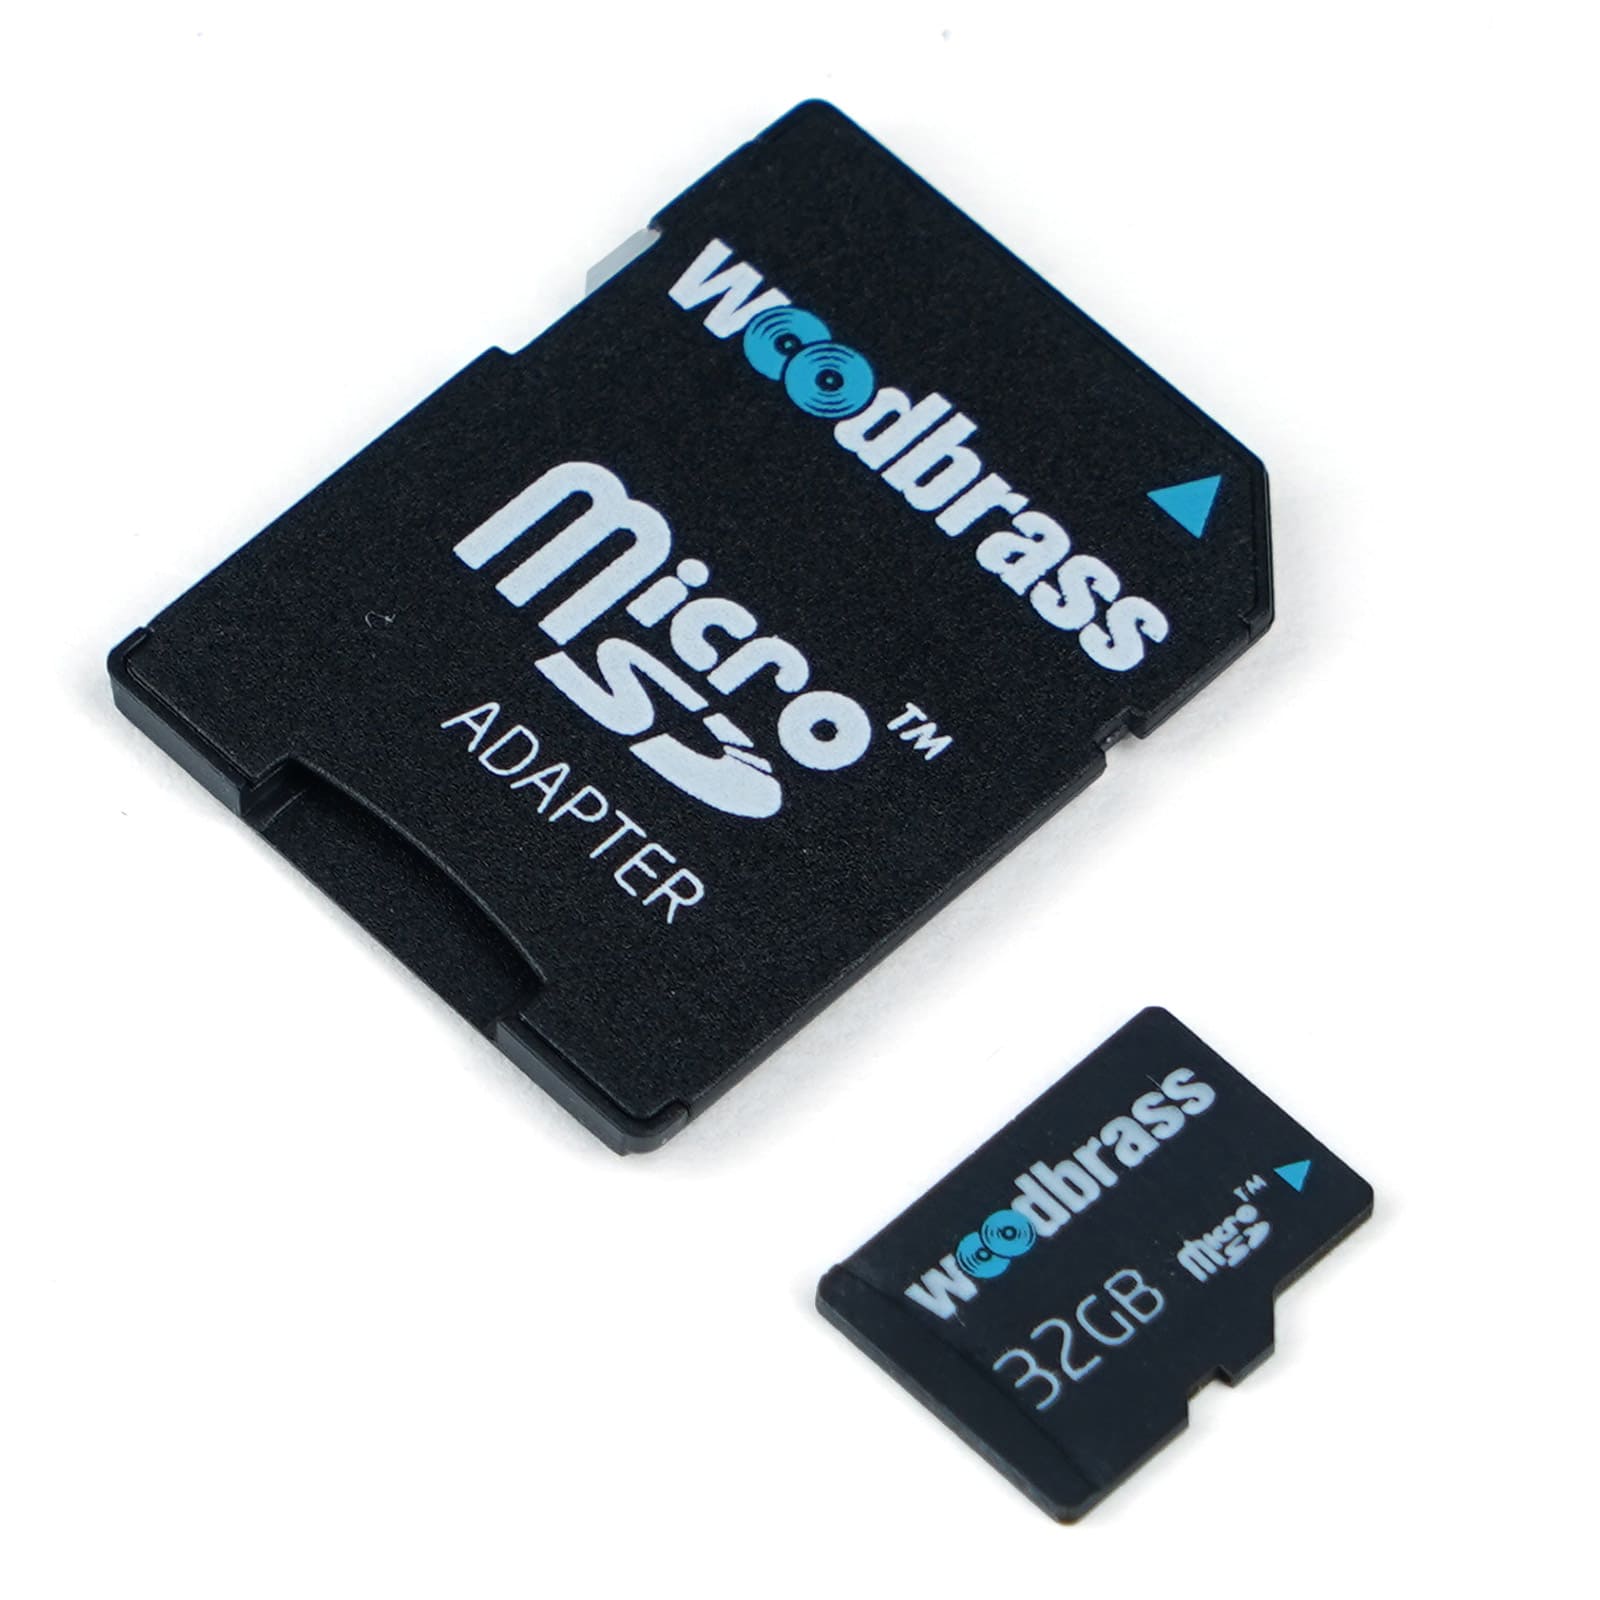 WOODBRASS 32GB SD CARD